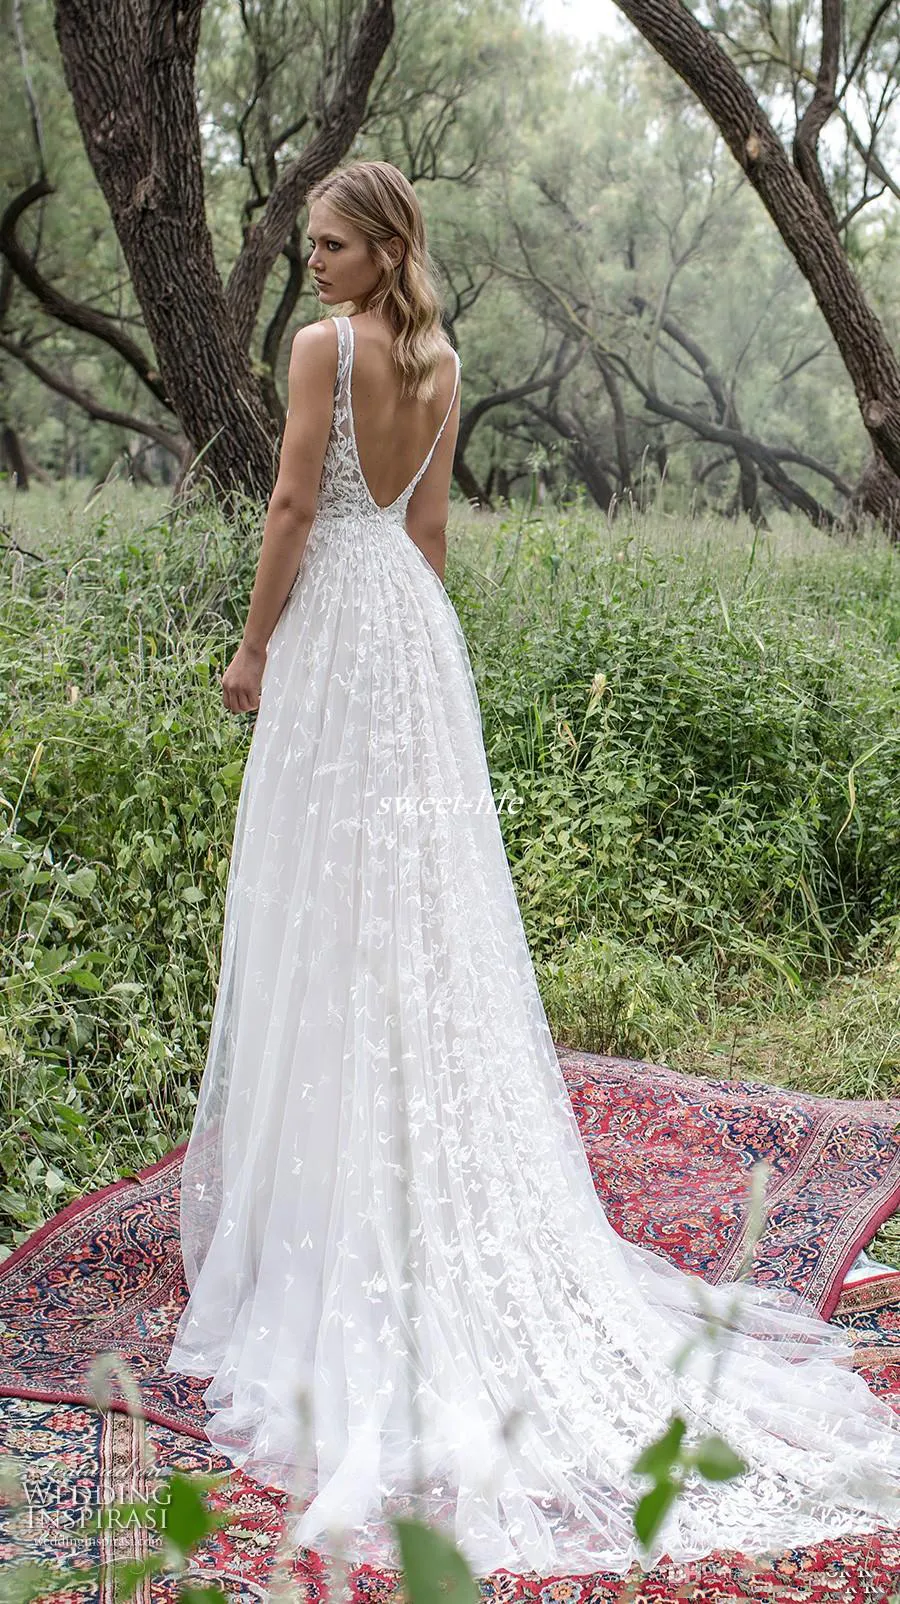 Romantic Limor Rosen Lace Wedding Gowns Deep V-Neck Sheer Straps Vintage Garden Beach Bridal Dresses Bohemia Party Gowns